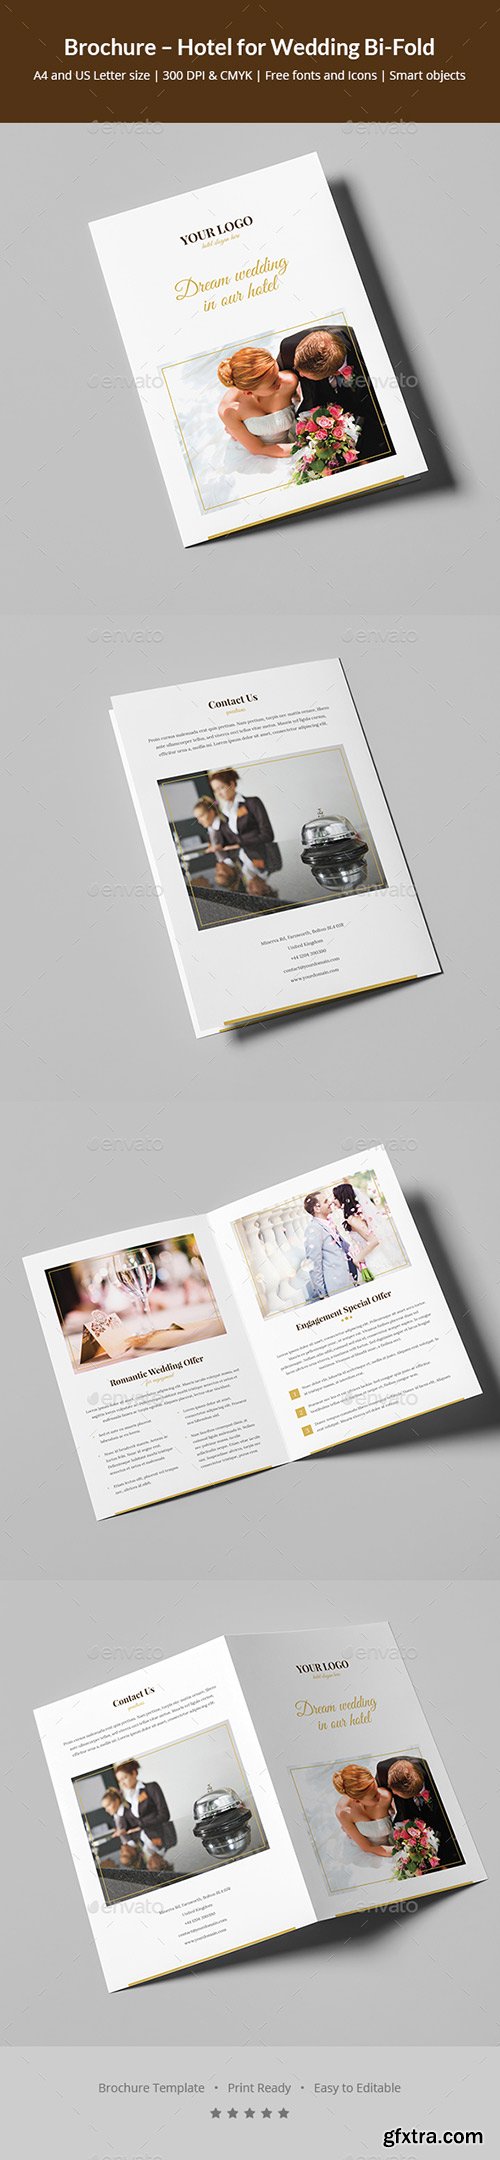 Graphicriver - Brochure – Hotel for Wedding Bi-Fold 20774546